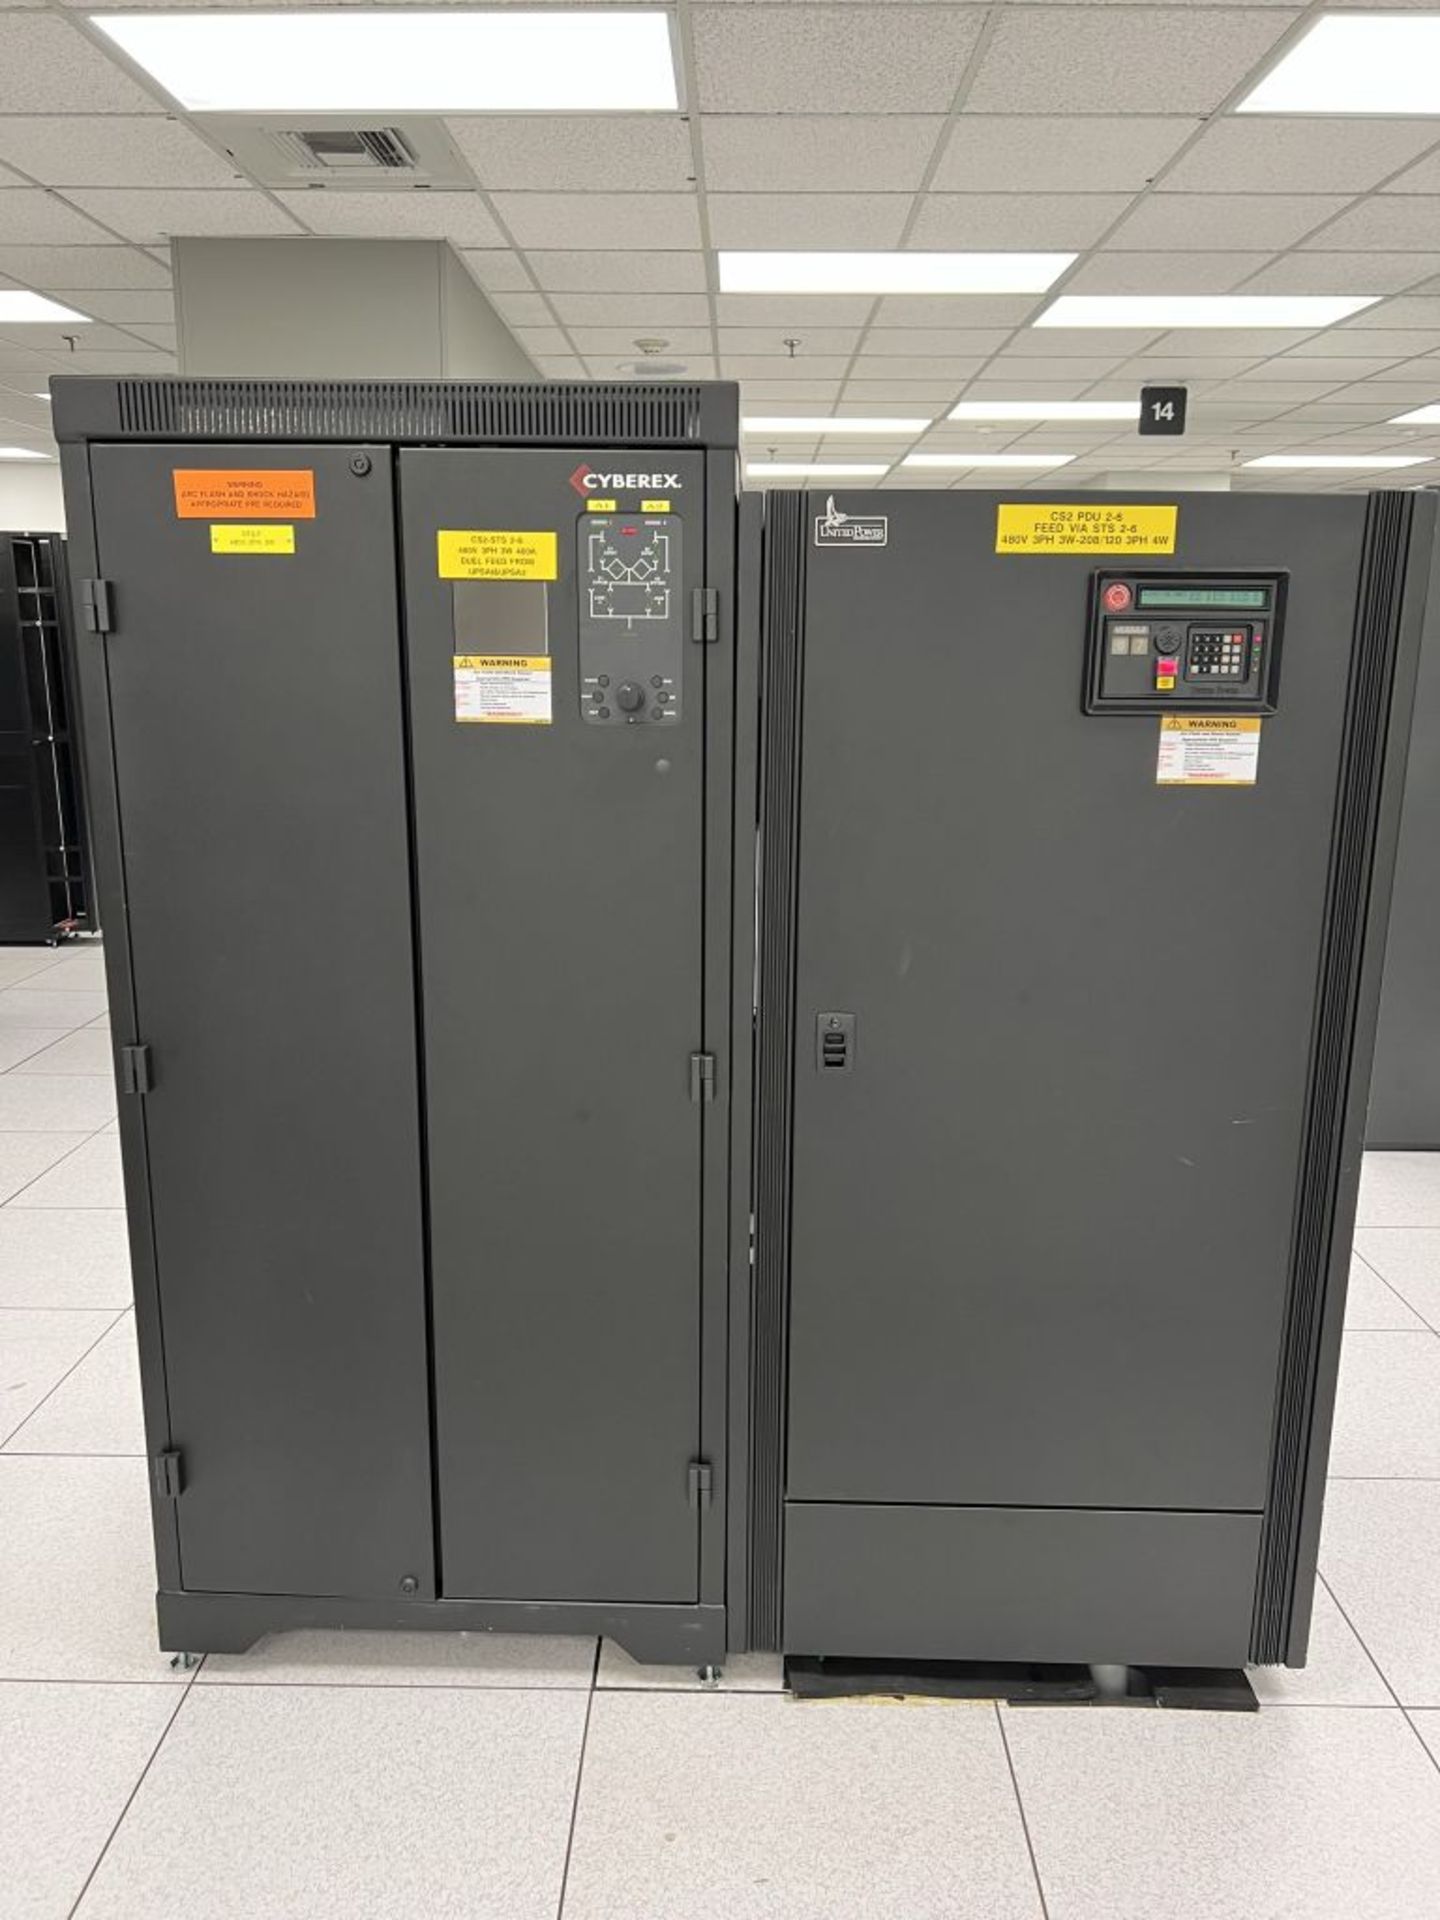 Spartanburg, SC - Cyberex Digital Static Transfer Switch with United Power Power Distribution Module